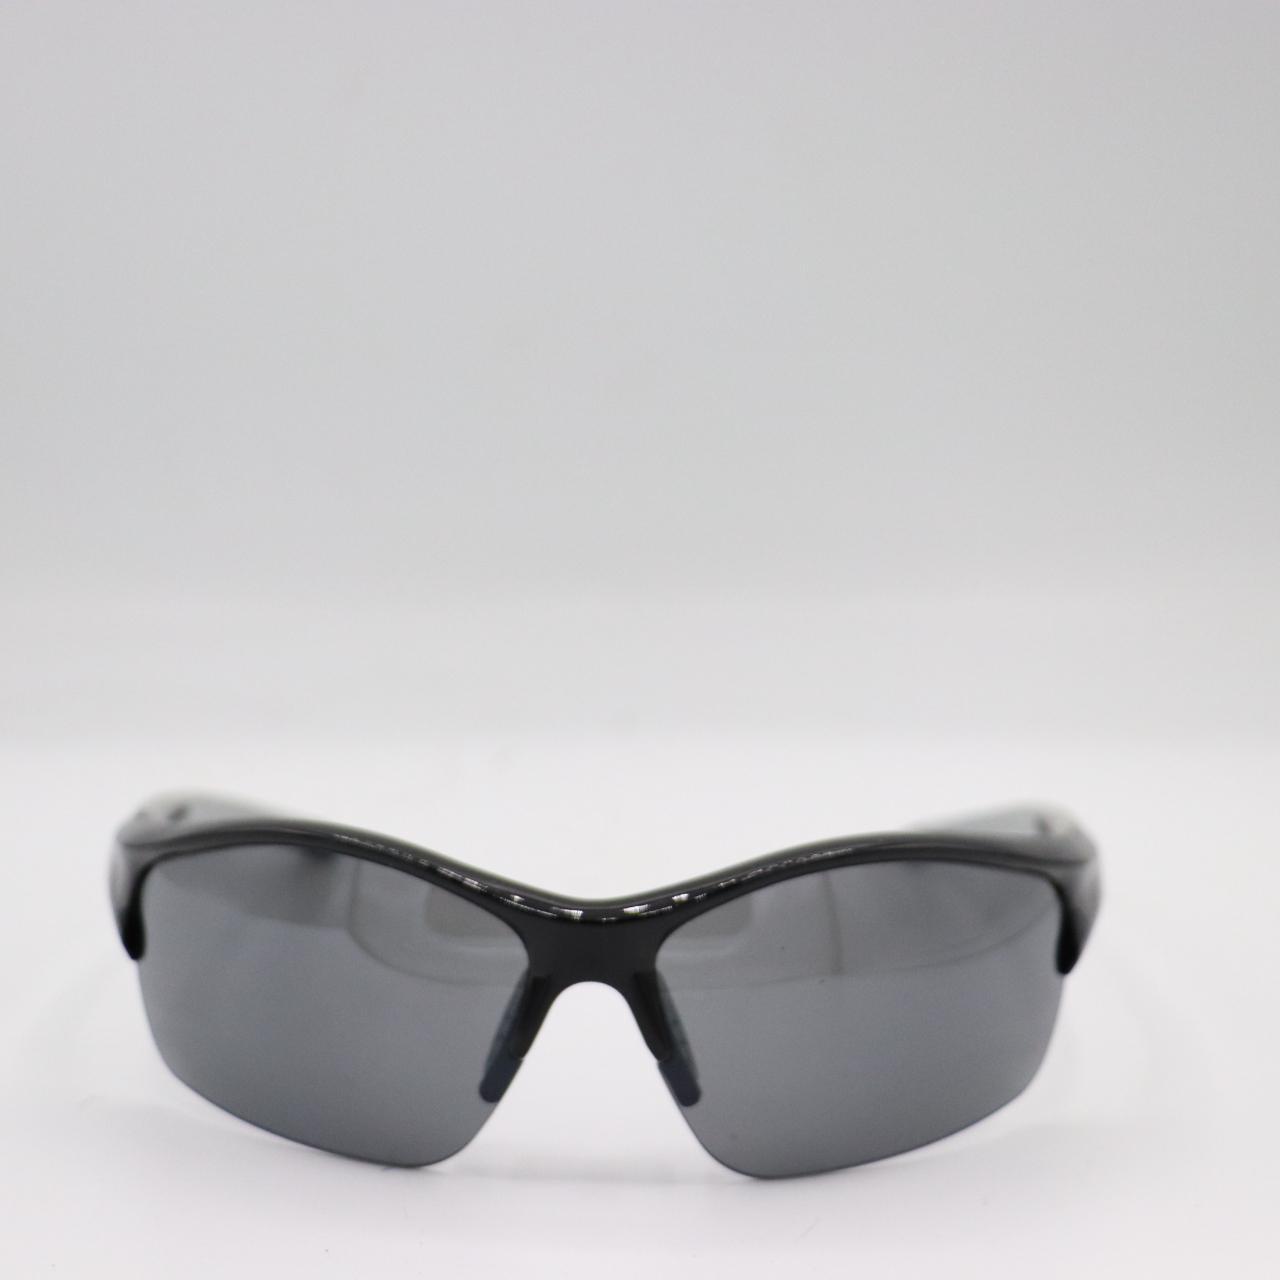 Men's Black and White Sunglasses | Depop